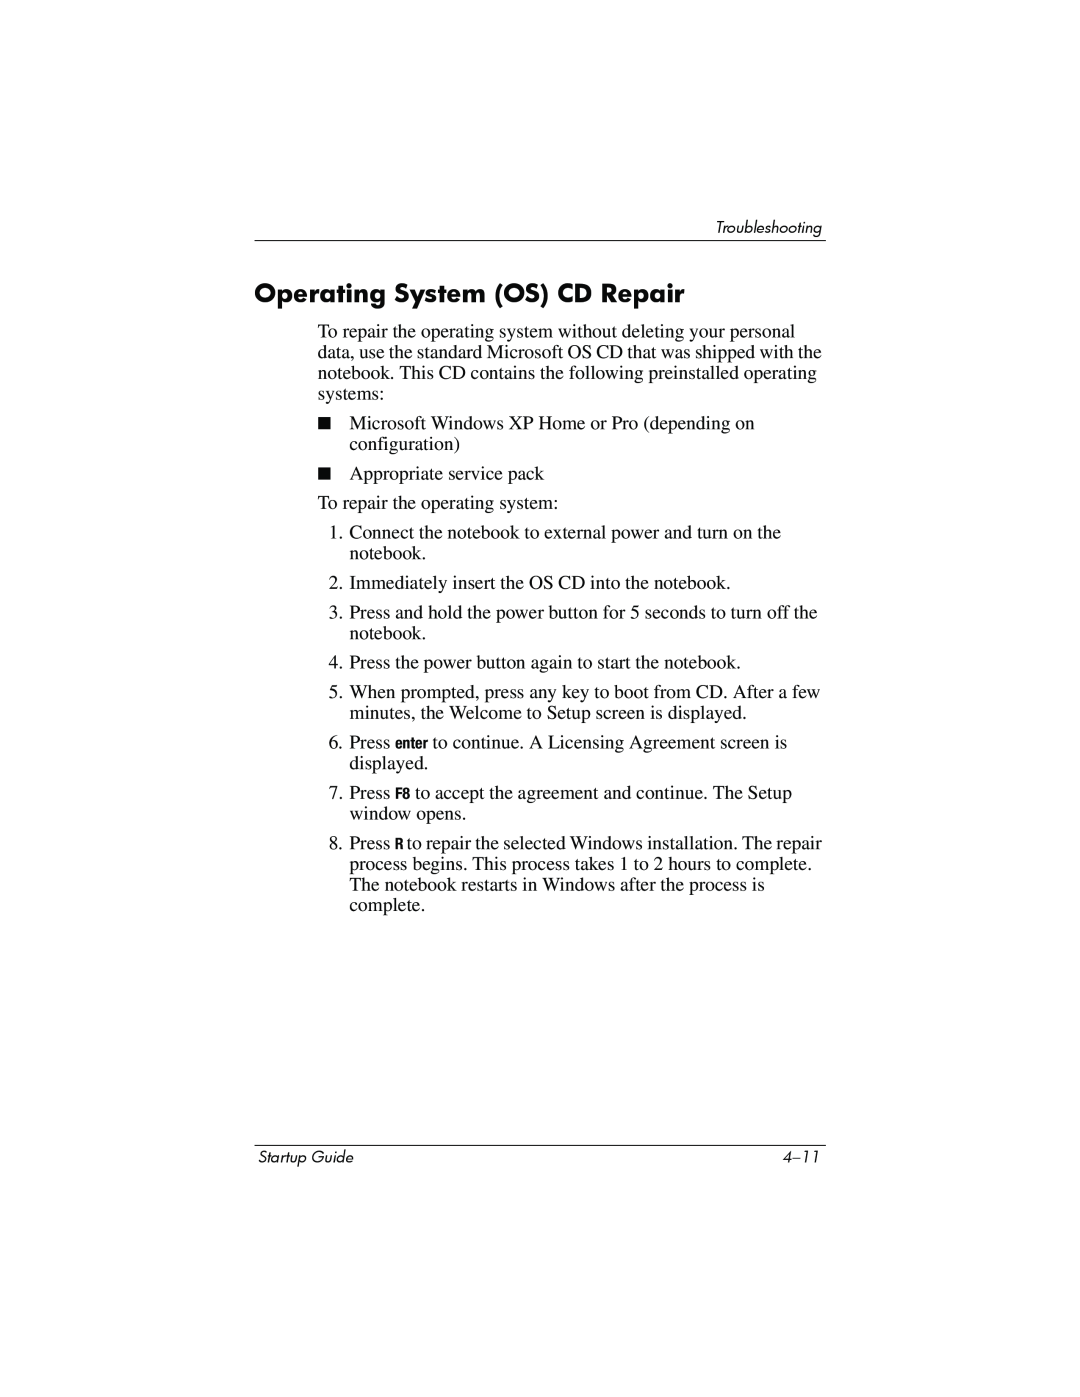 Compaq Personal Computer manual Operating System OS CD Repair 